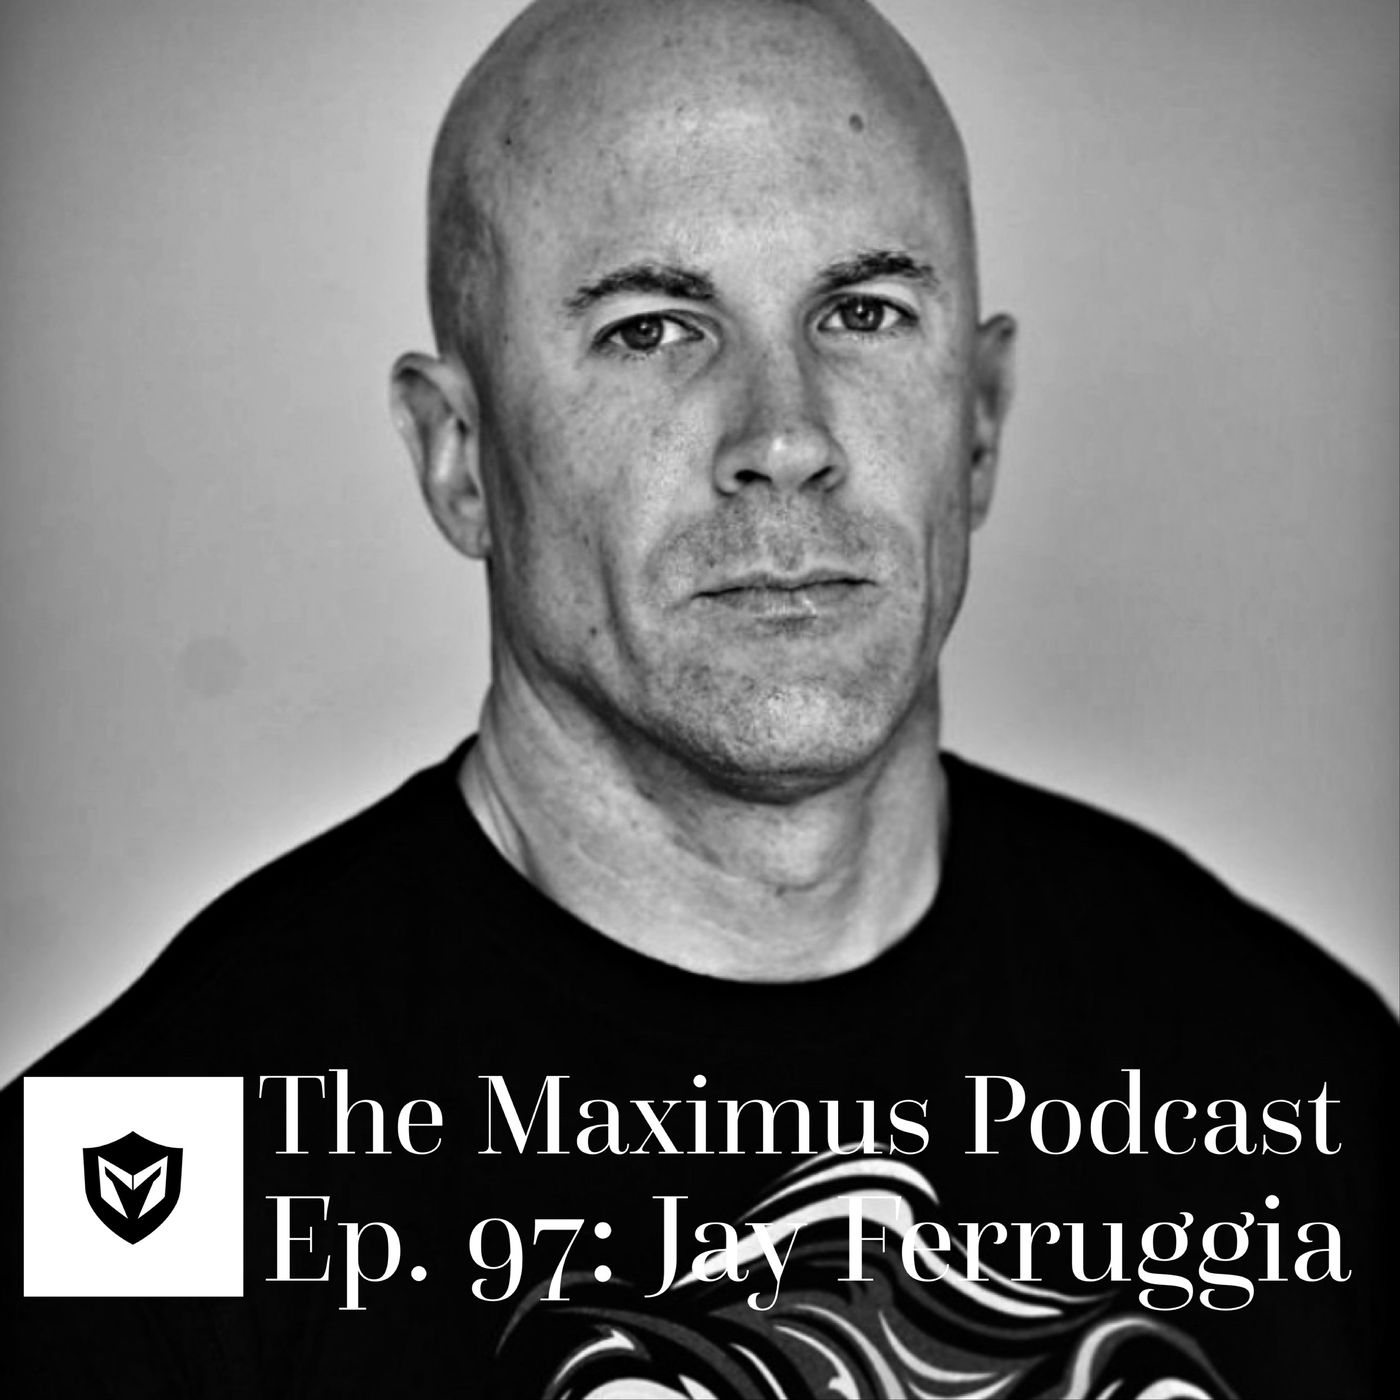 The Maximus Podcast Ep. 97 - Jay Ferruggia